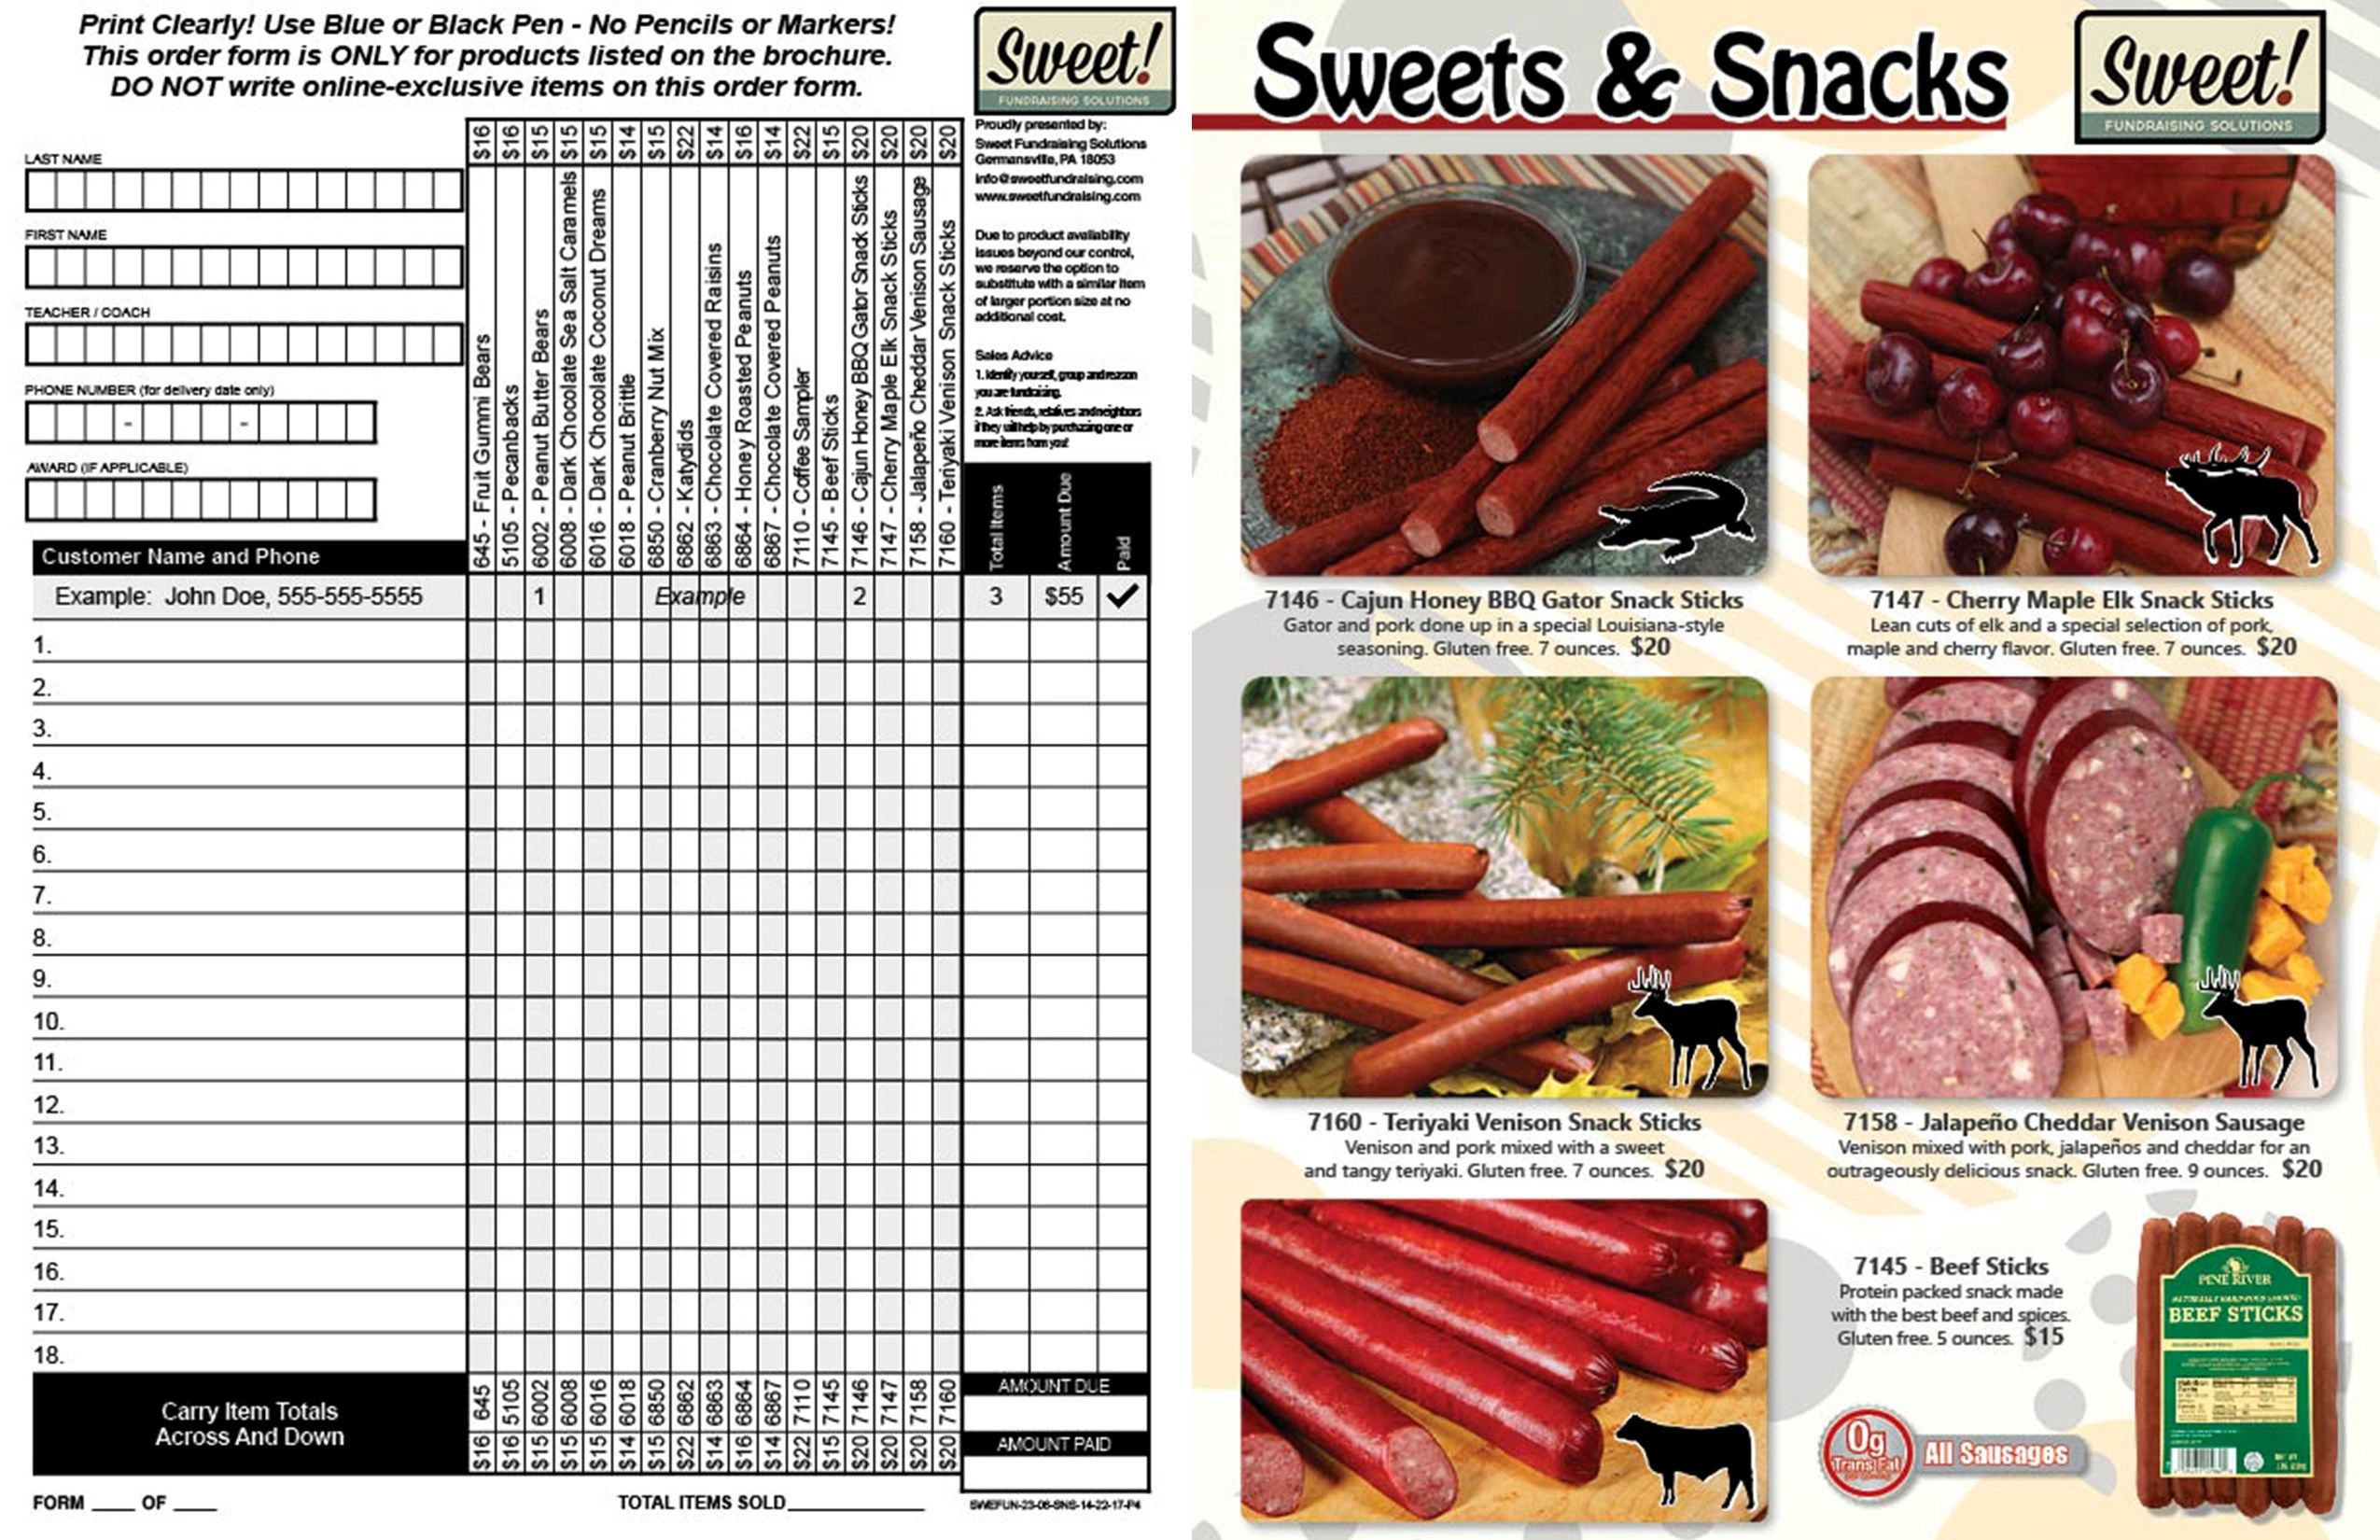 Sweets & Snacks Brochure